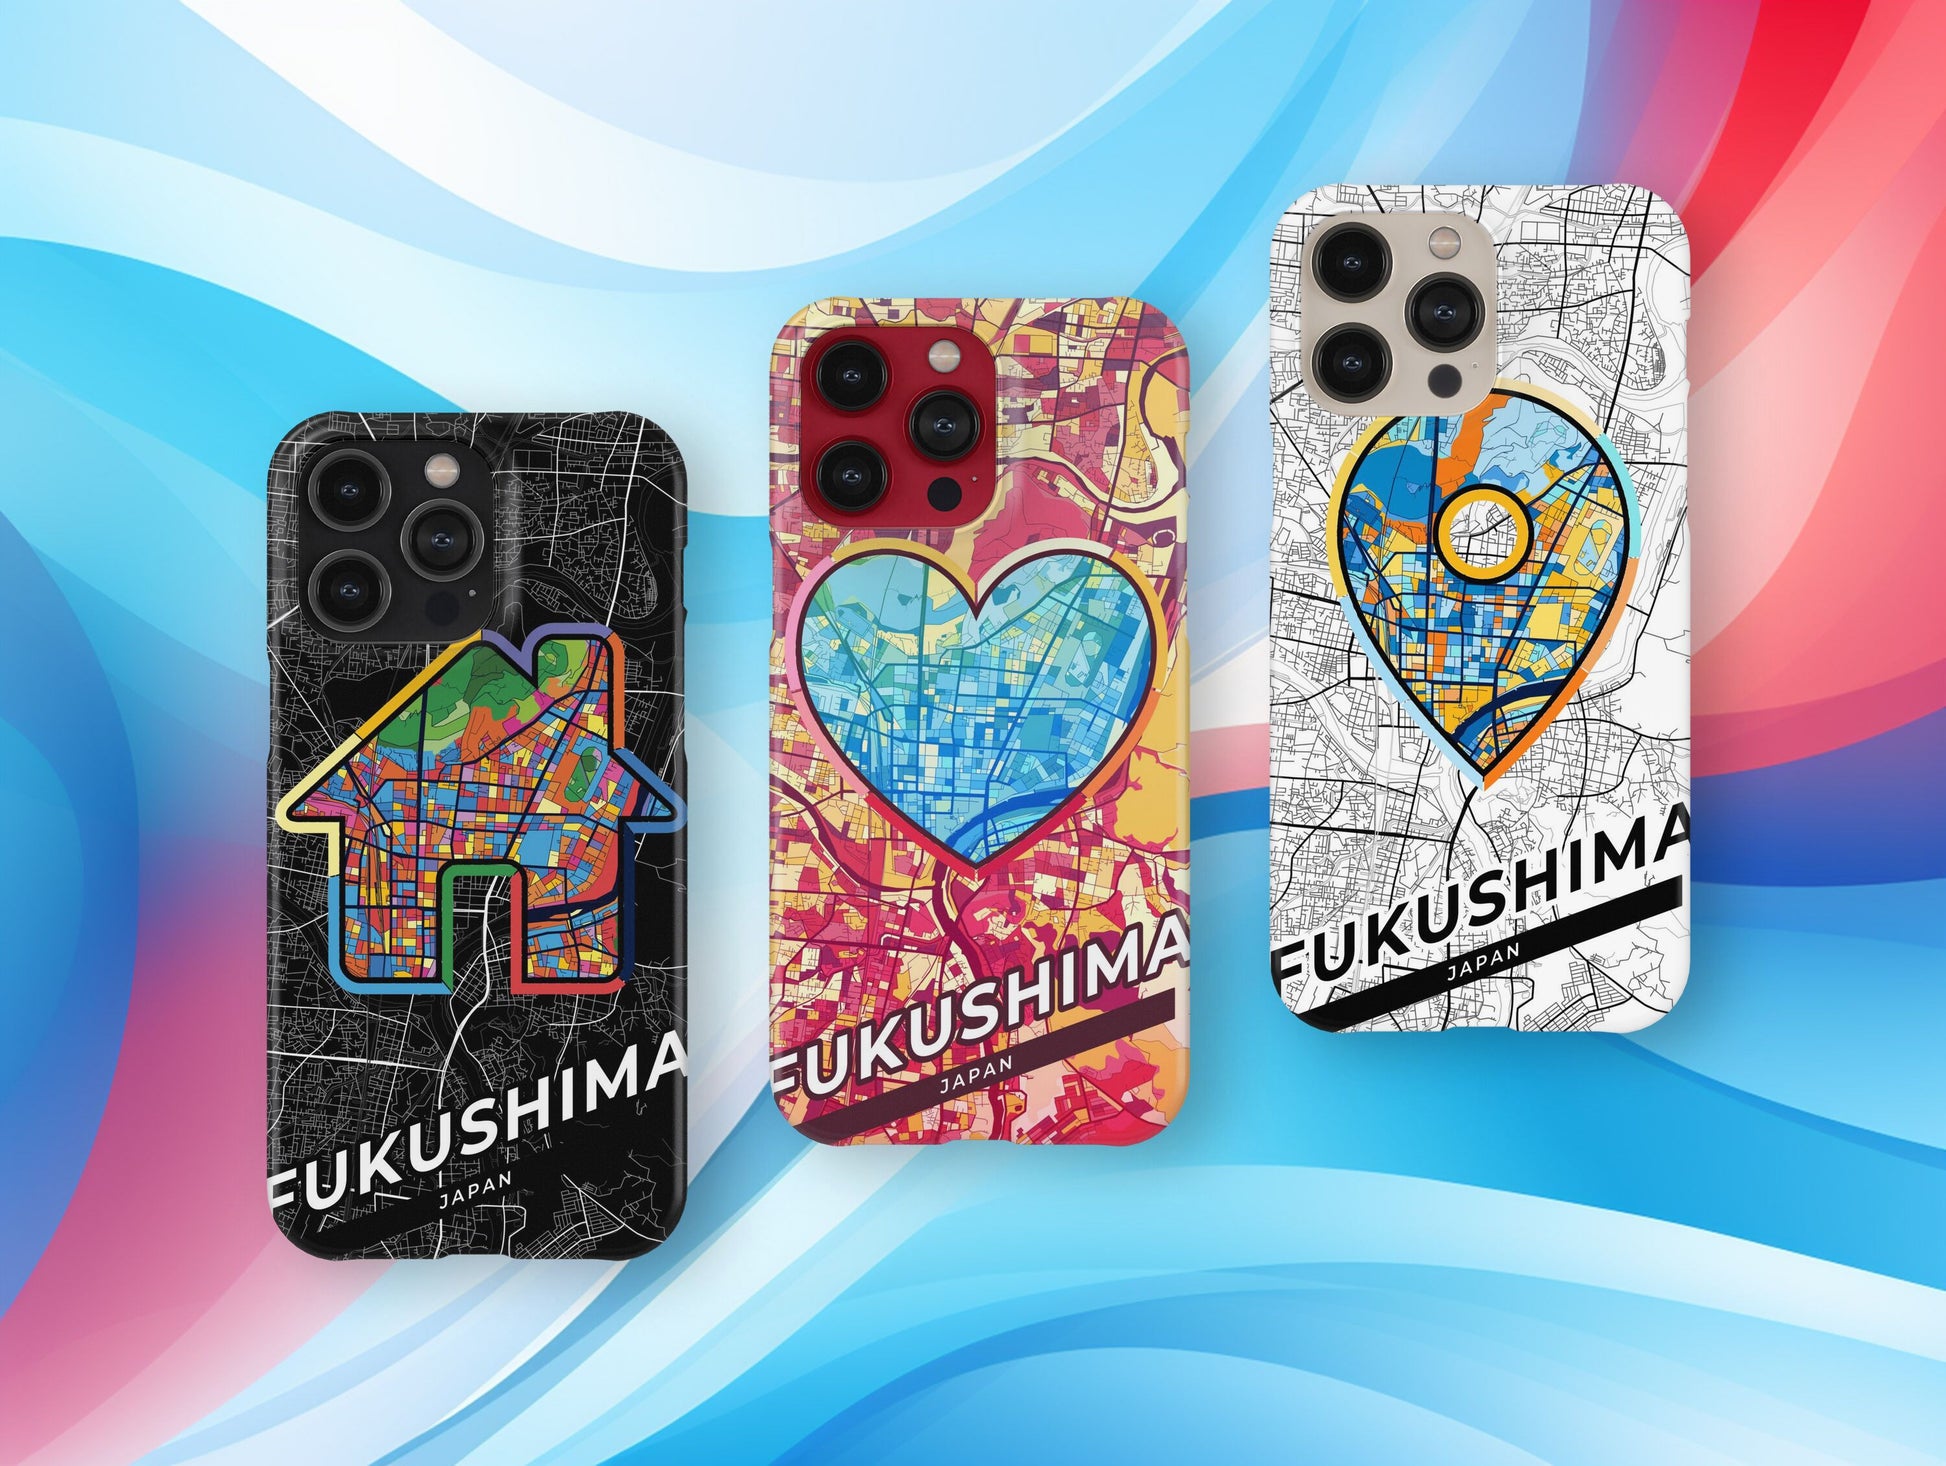 Fukushima Japan slim phone case with colorful icon. Birthday, wedding or housewarming gift. Couple match cases.